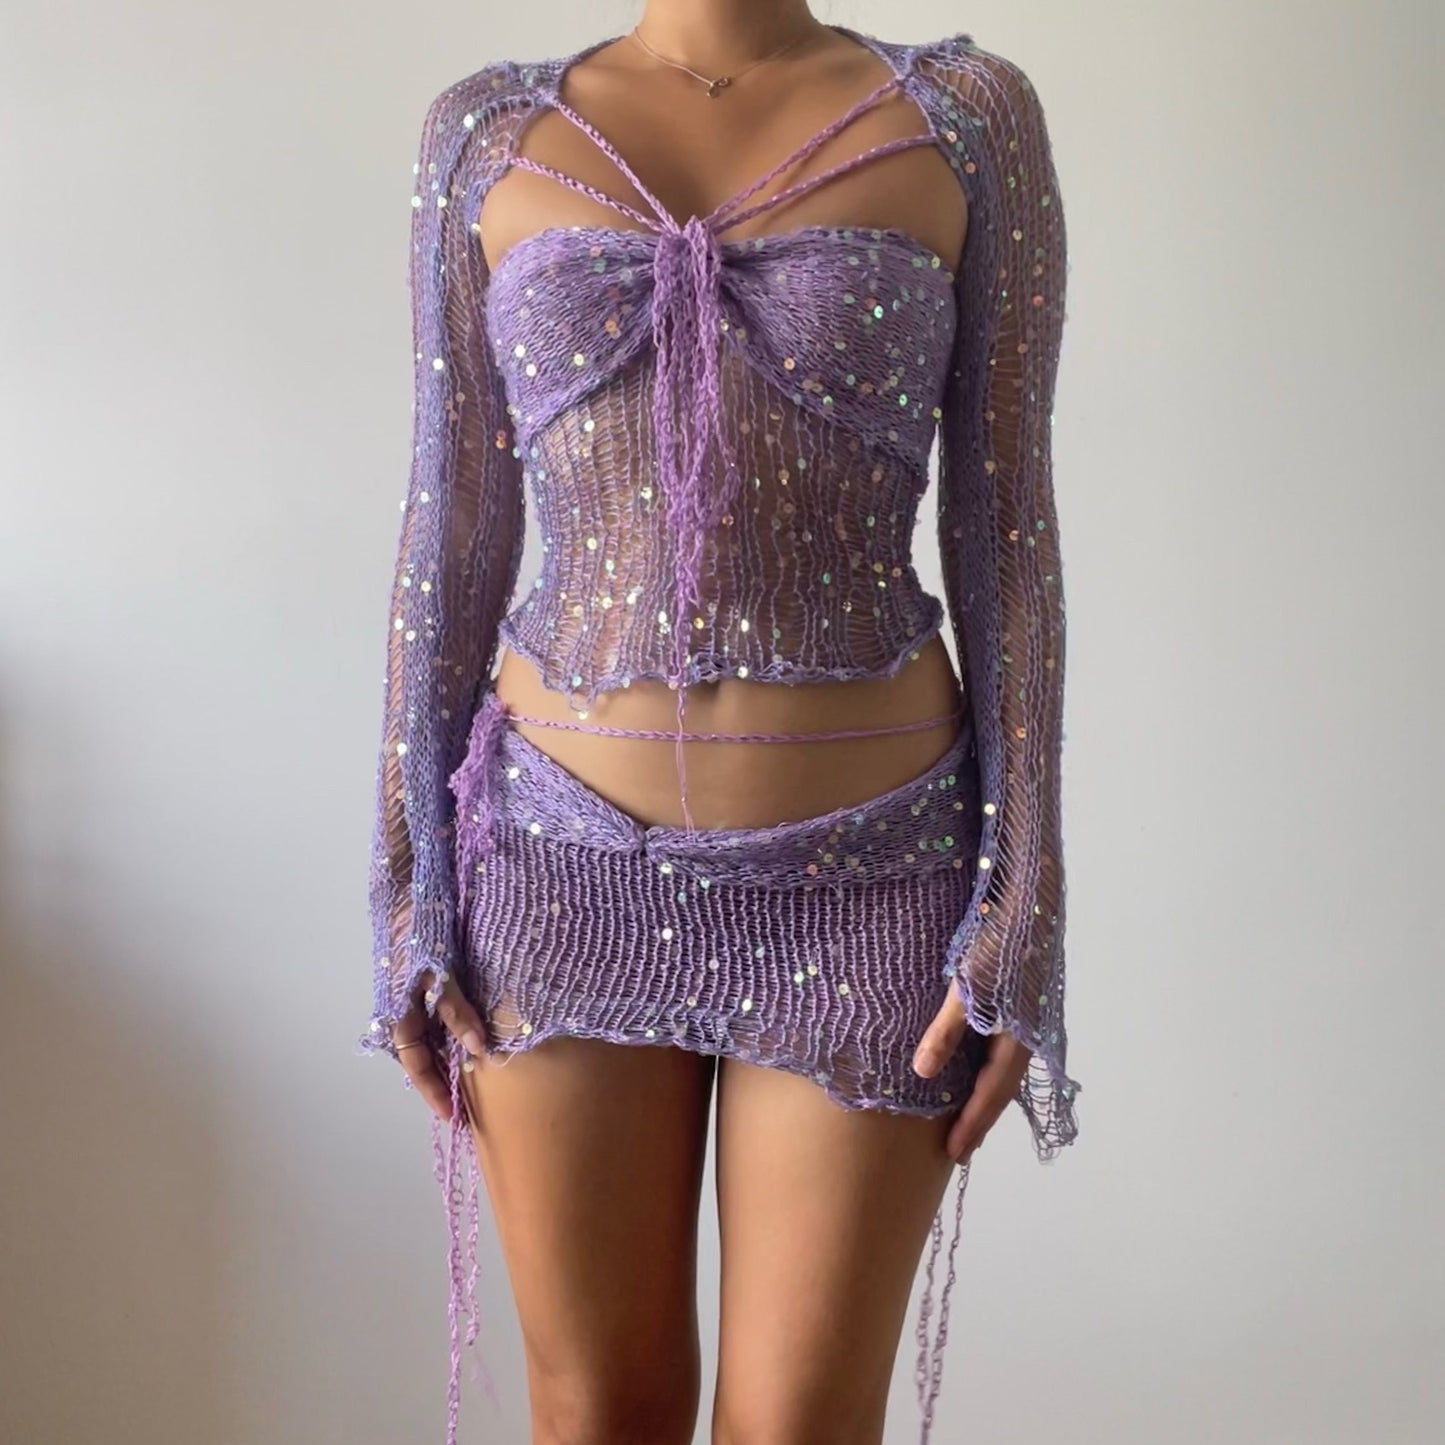 Butterfly set (Top & Skirt) - Dark Purple